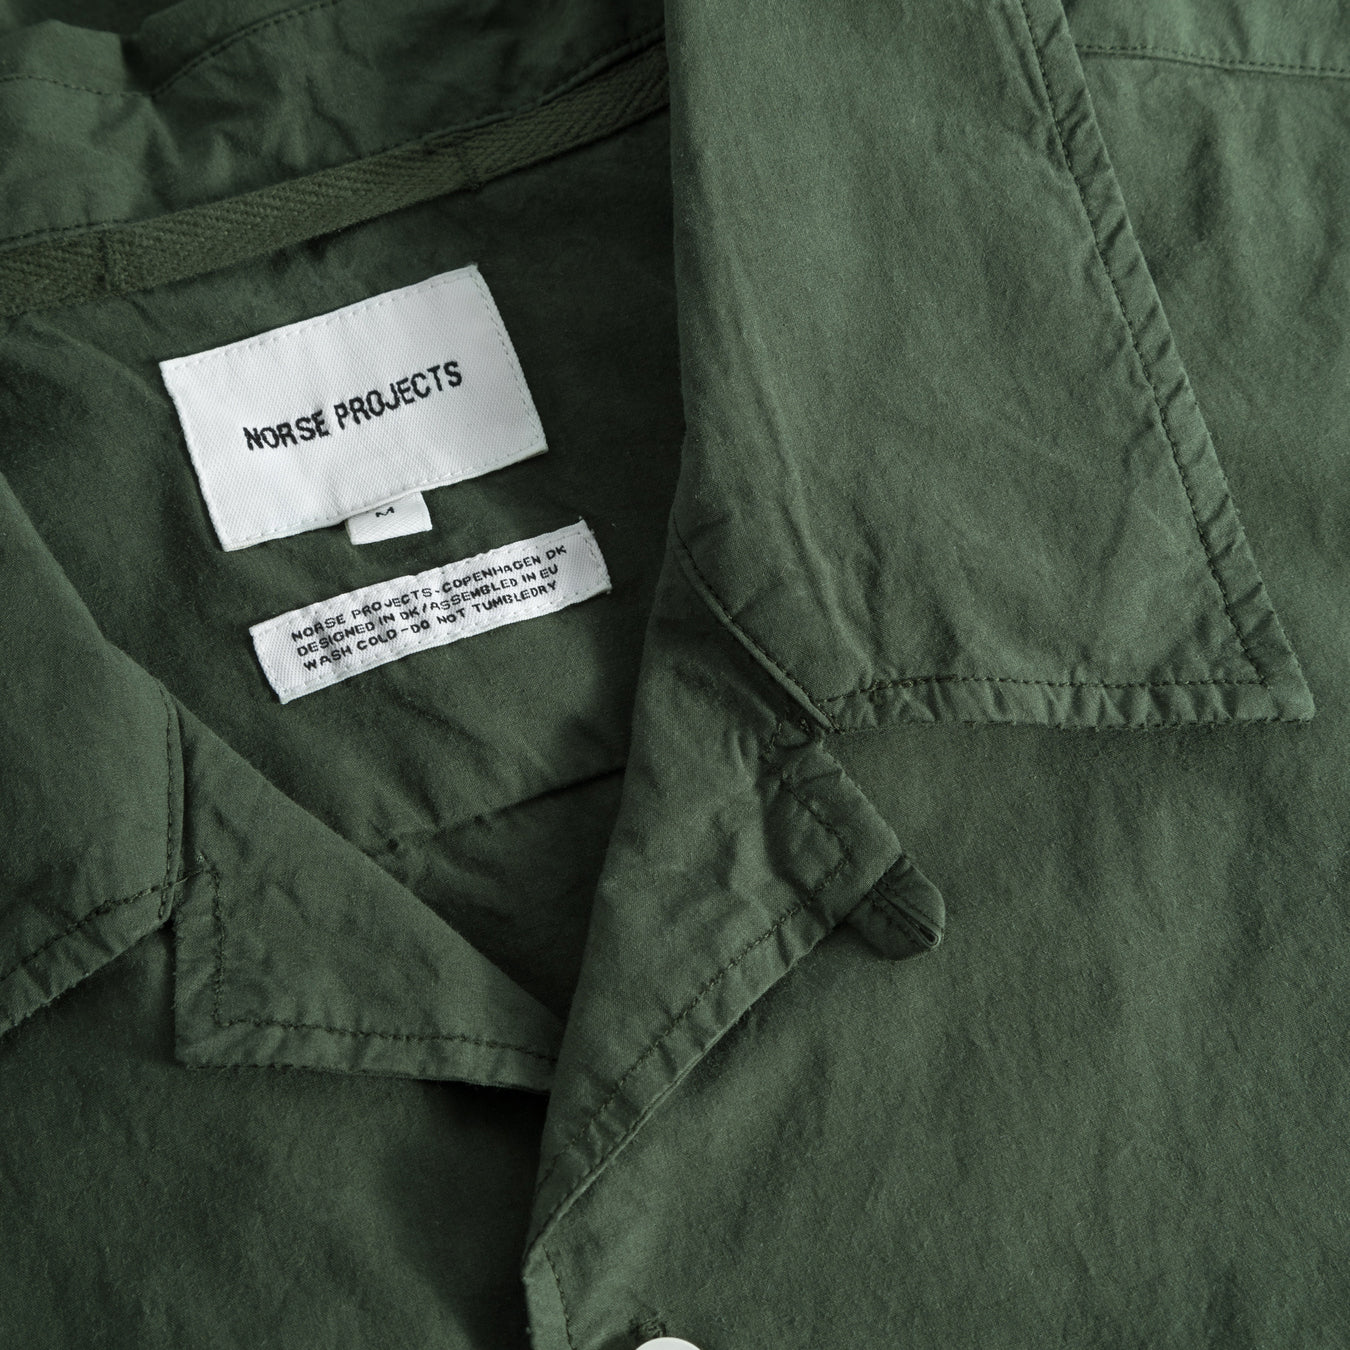 Carsten Tencel Shirt - Spruce Green